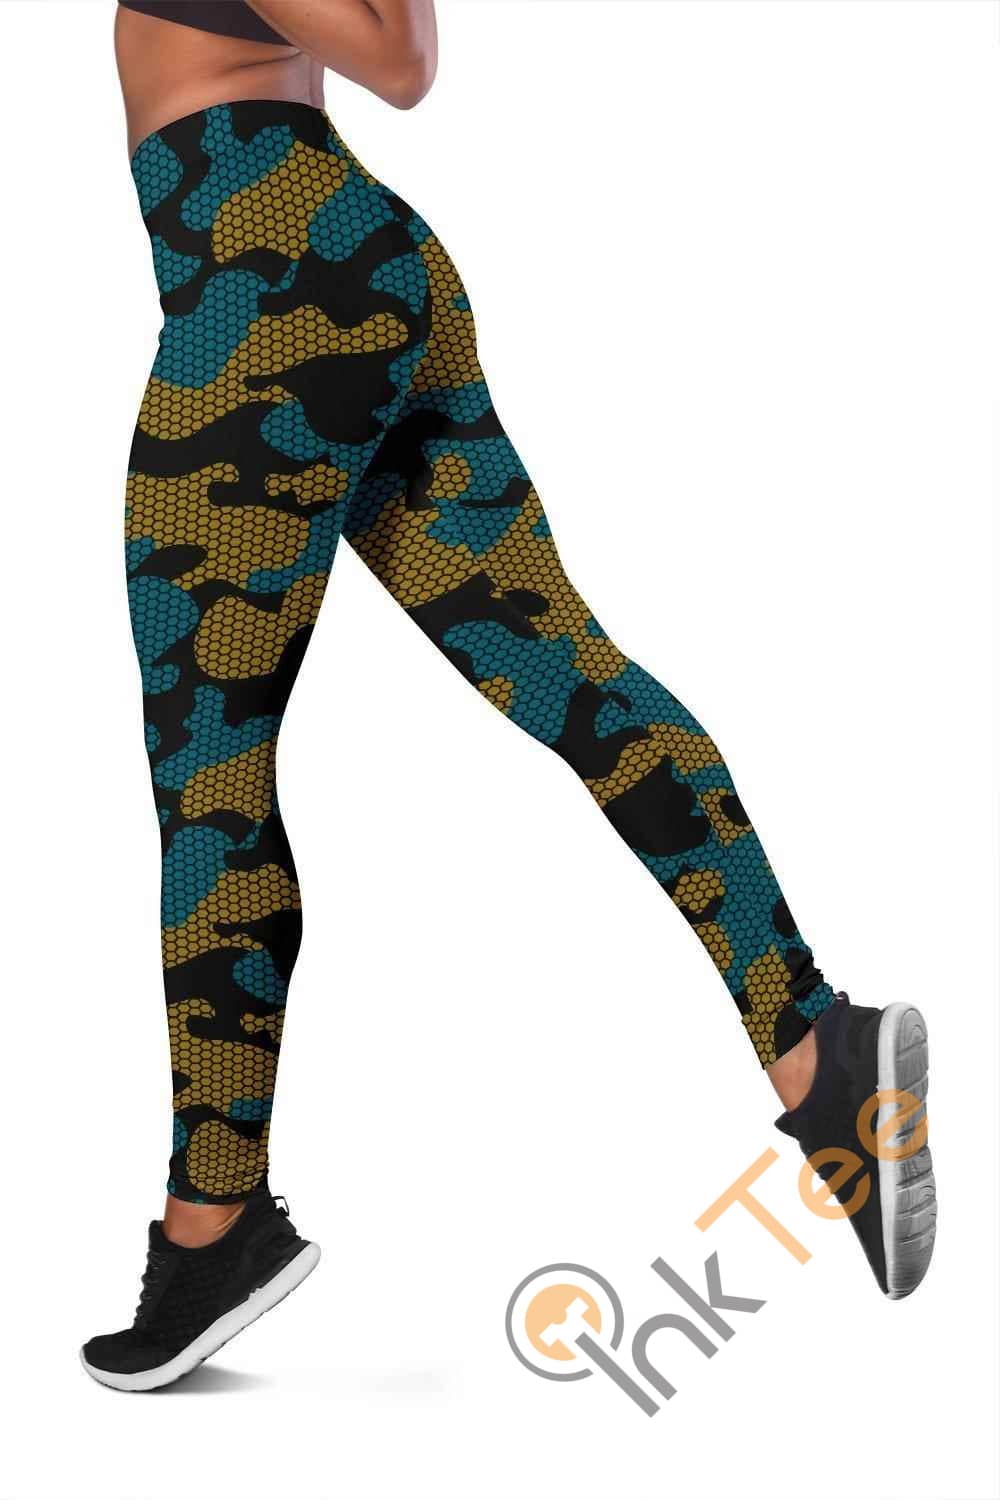 Inktee Store - Jacksonville Jaguars Inspired Hex Camo 3D All Over Print For Yoga Fitness Fashion Women'S Leggings Image